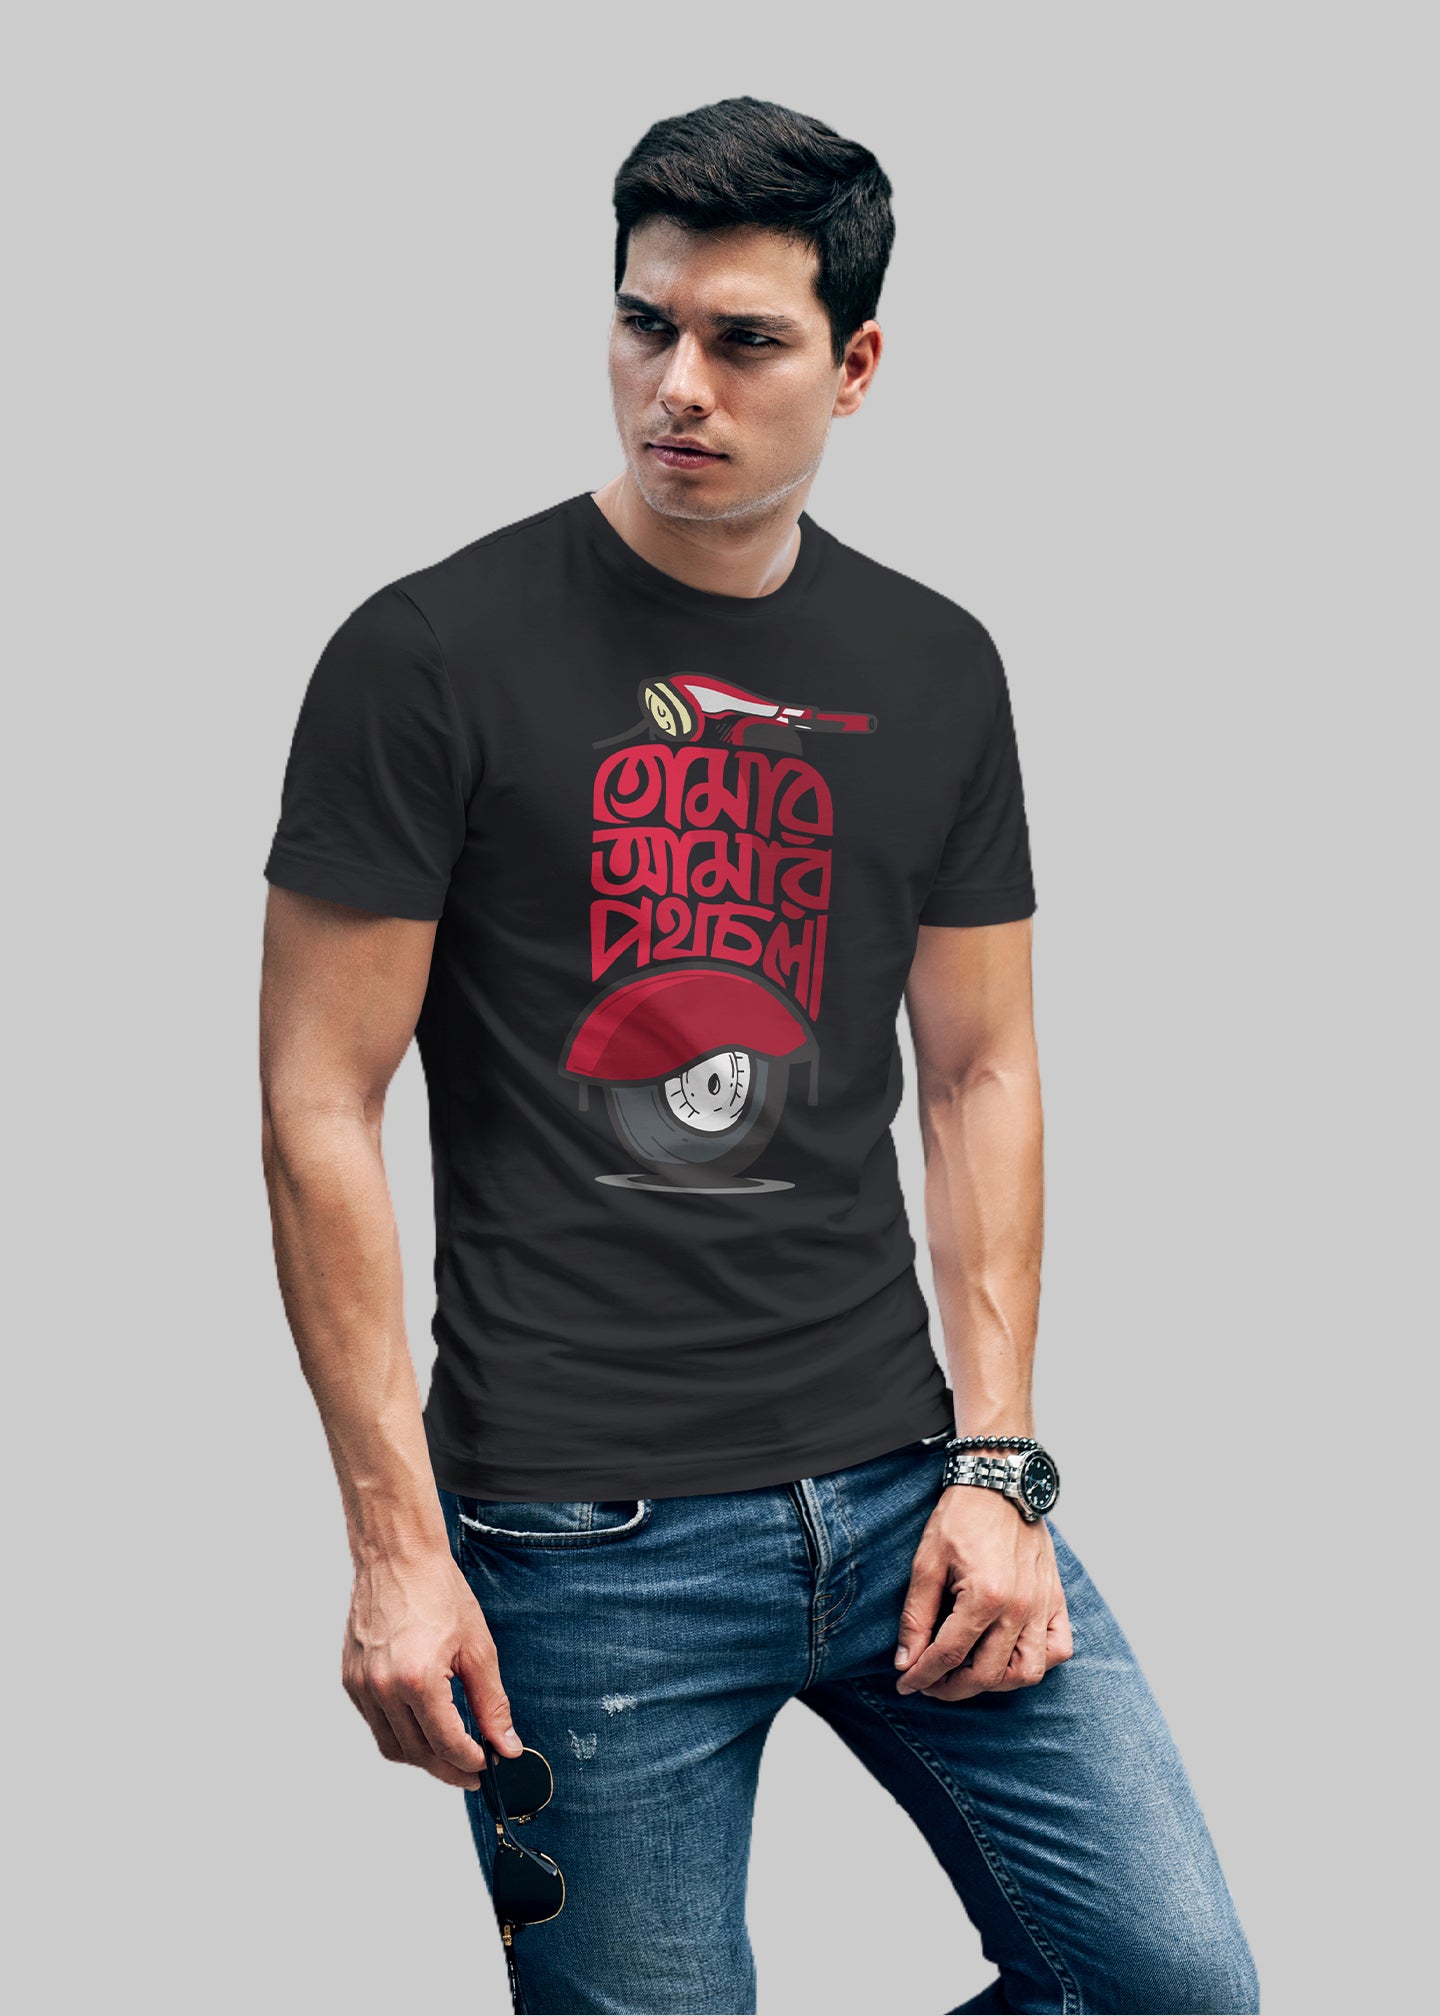 Tomar amar pothchola Printed Half Sleeve Premium Cotton T-shirt For Men